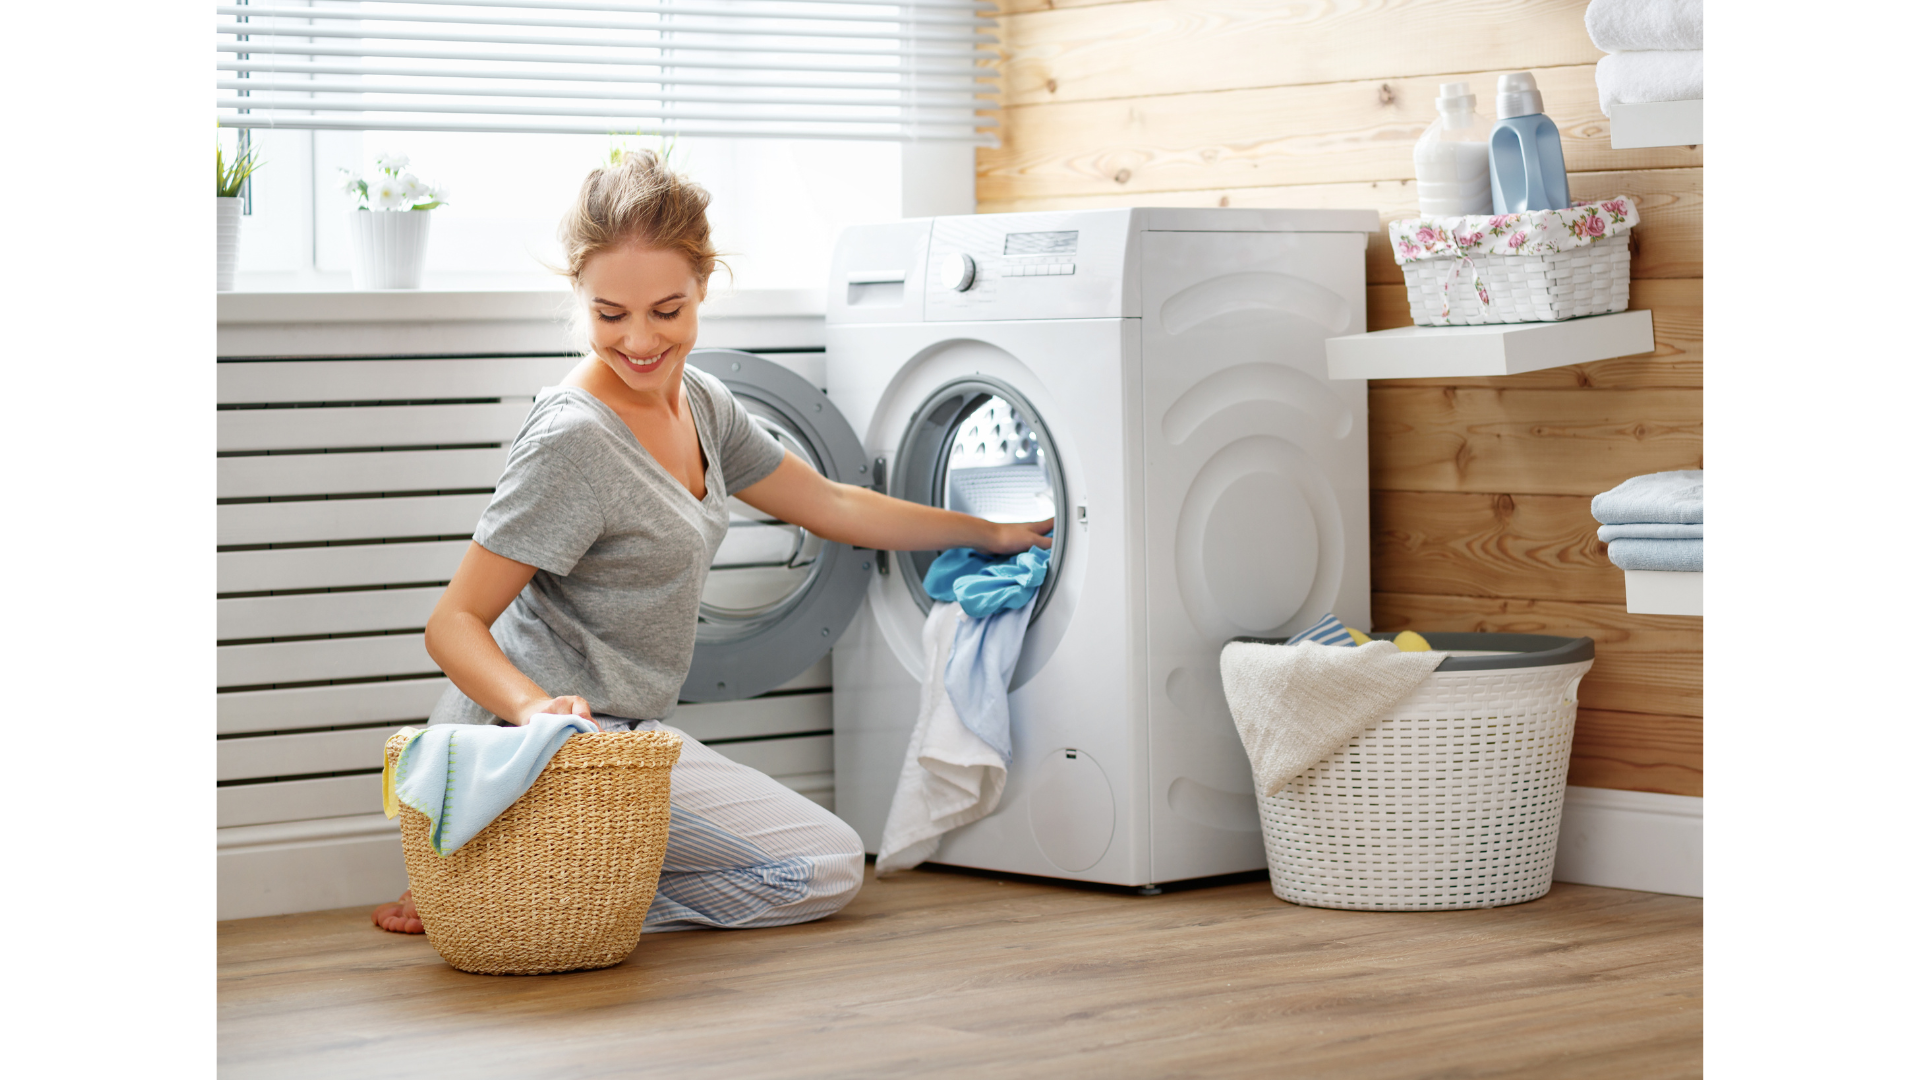 freestanding washing machine / loading laundry